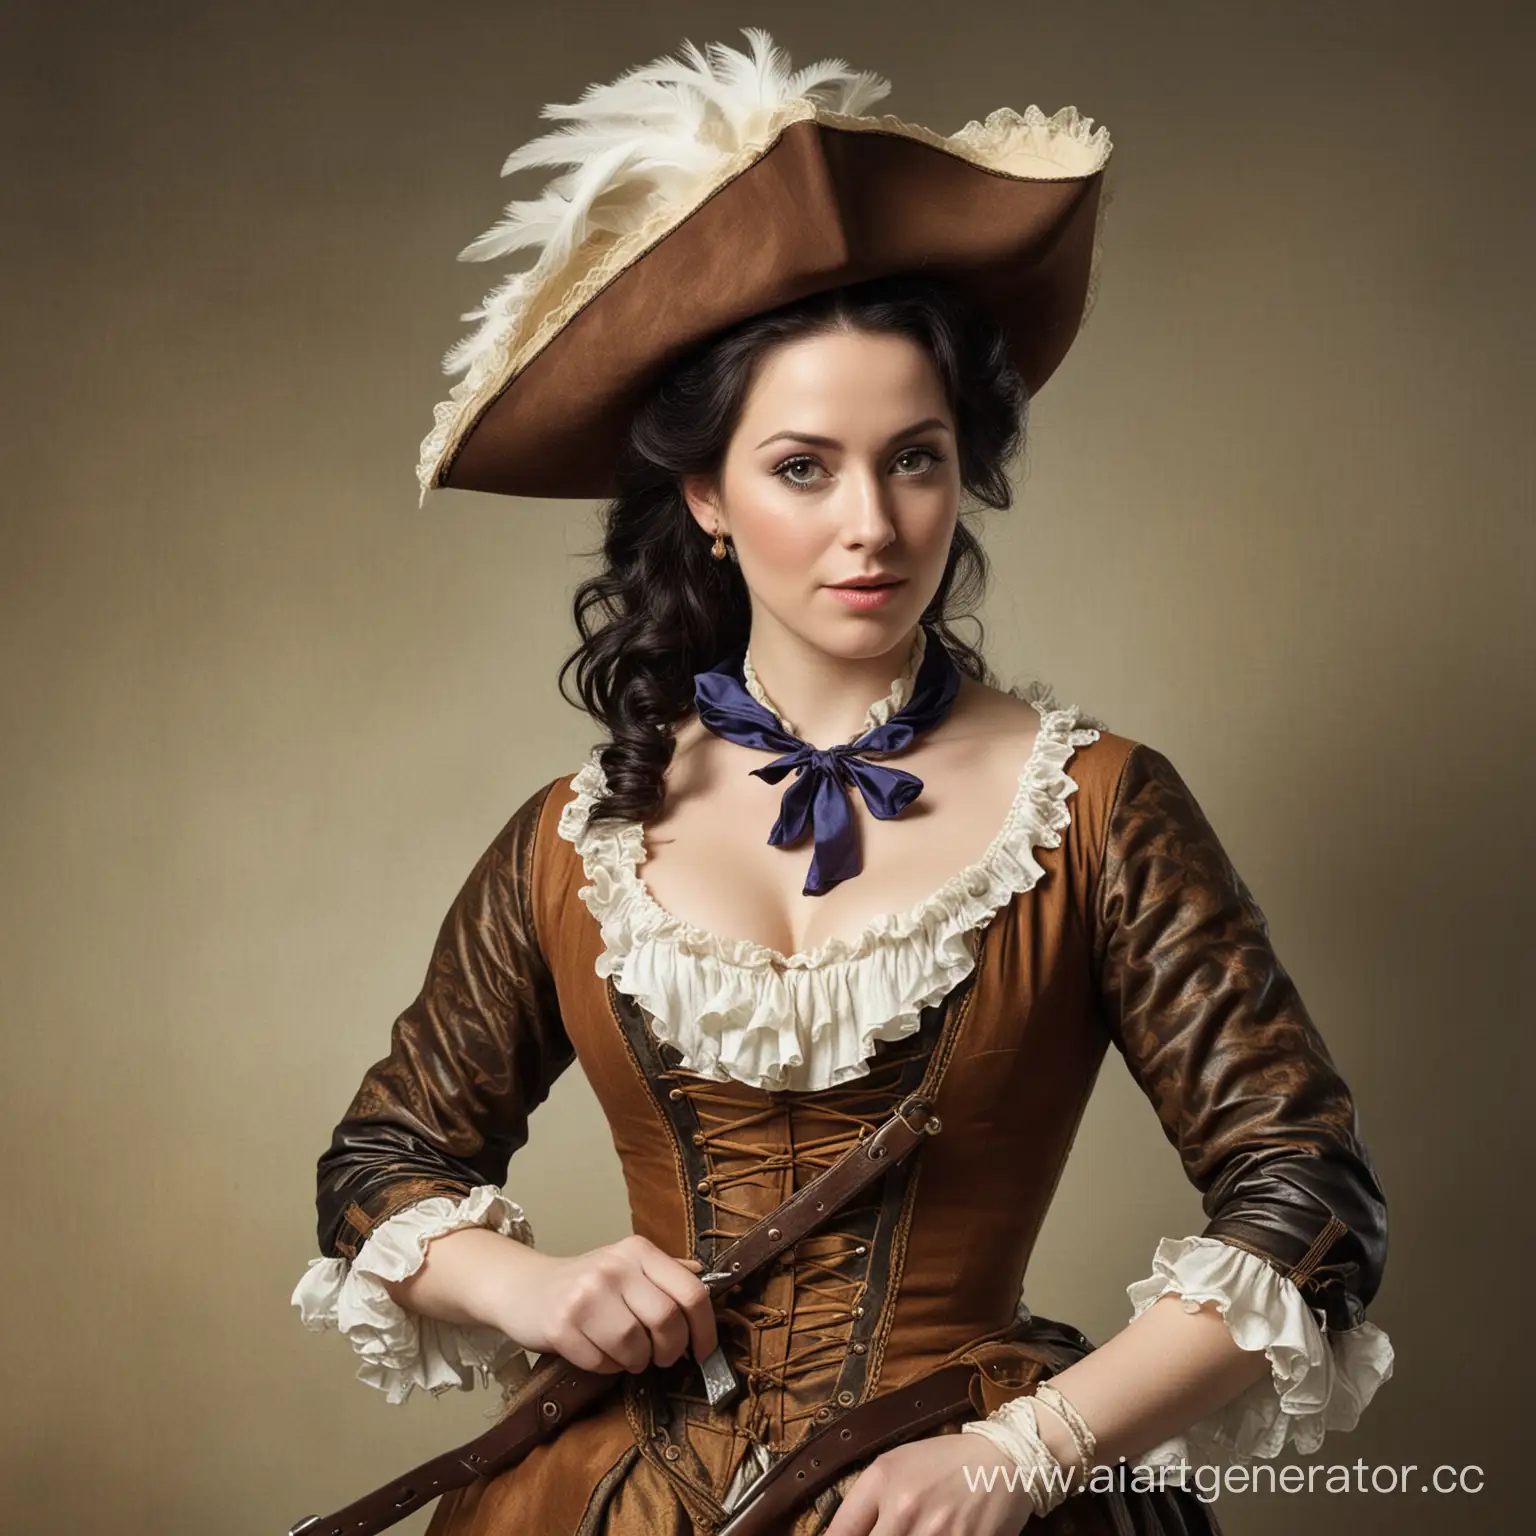 Rarity-Woman-Bandit-in-18th-Century-Setting